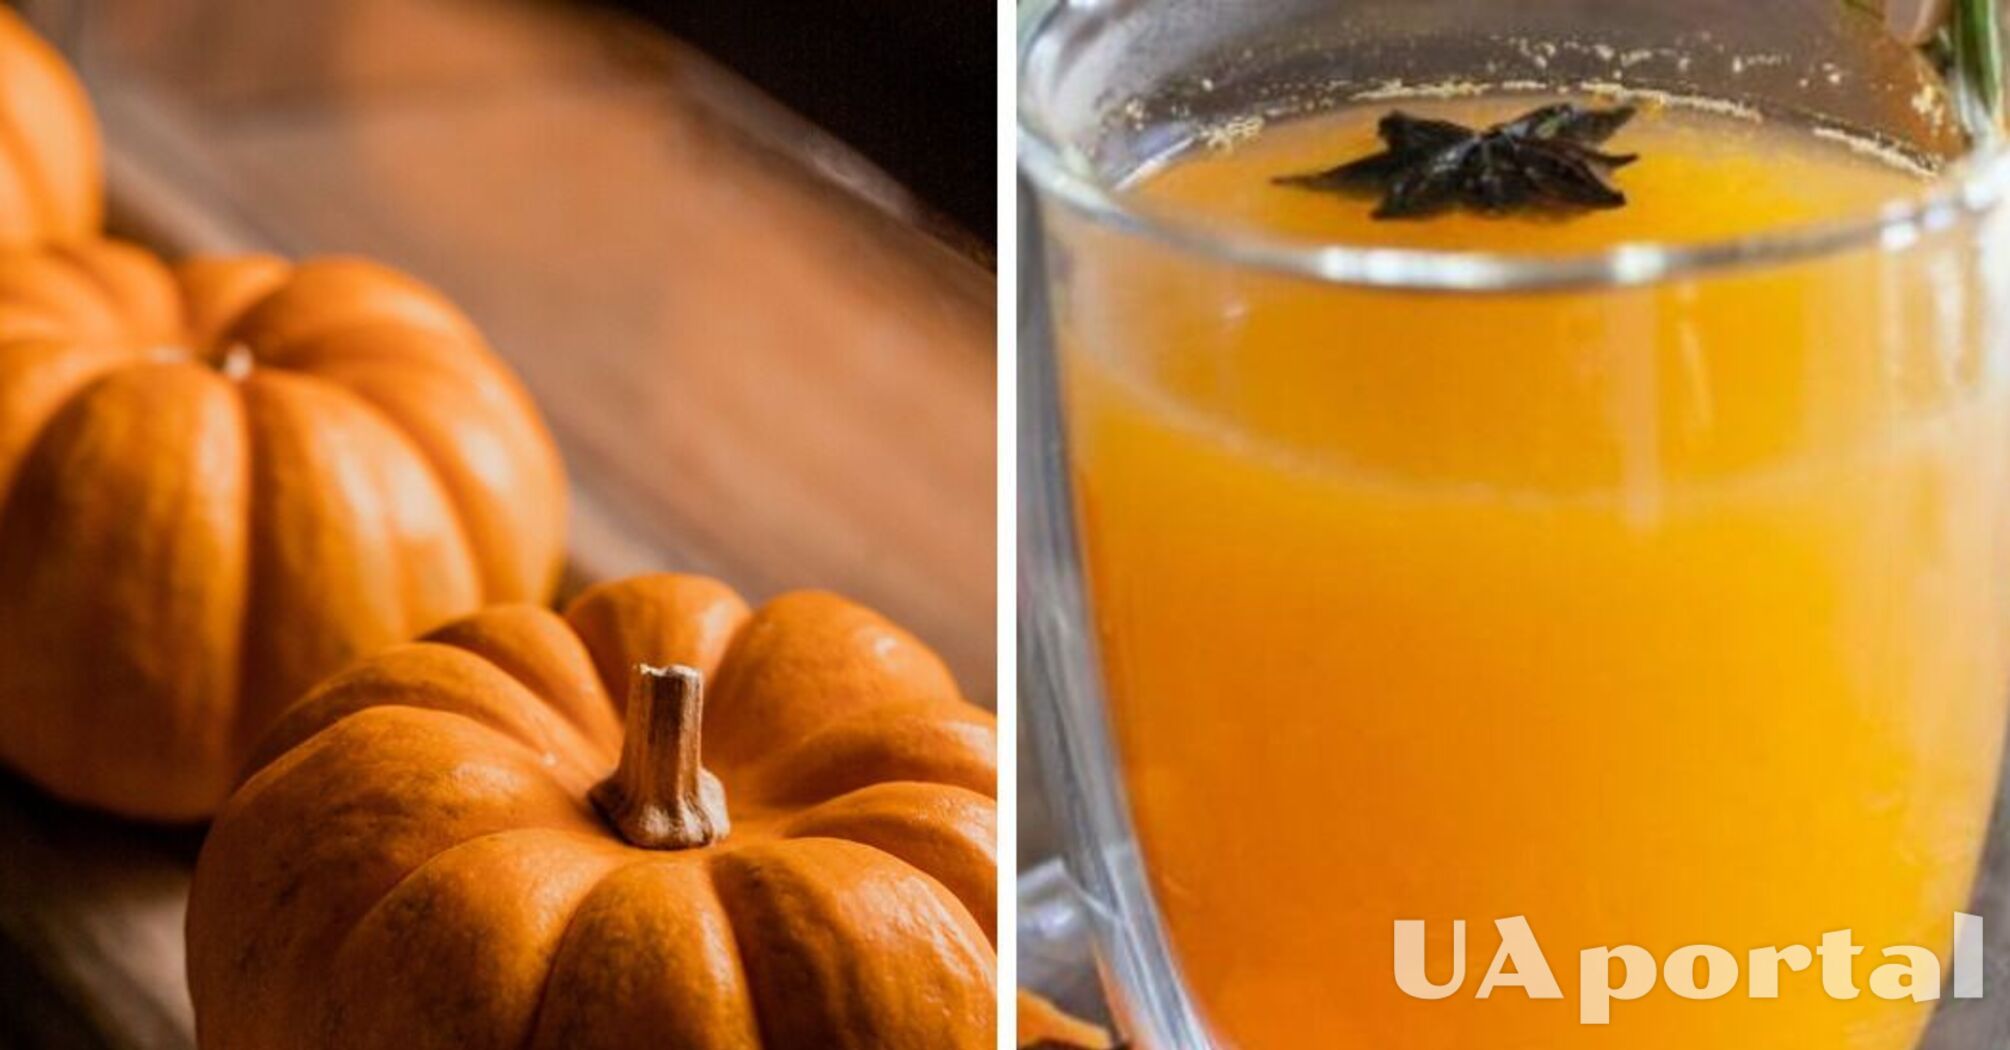 What to cook from pumpkin - pumpkin dishes - pumpkin drink